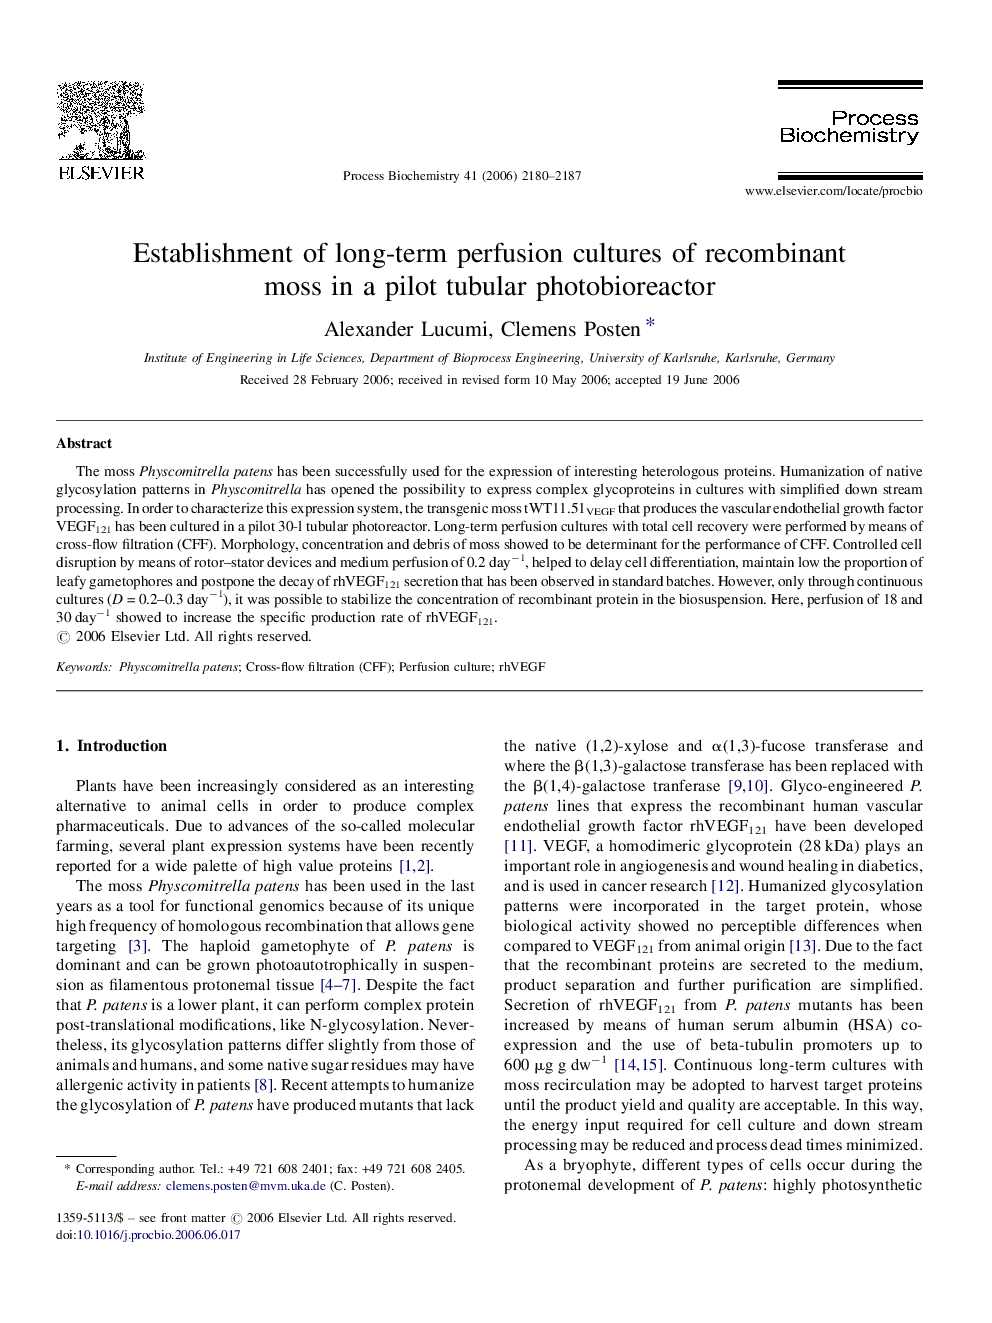 Establishment of long-term perfusion cultures of recombinant moss in a pilot tubular photobioreactor